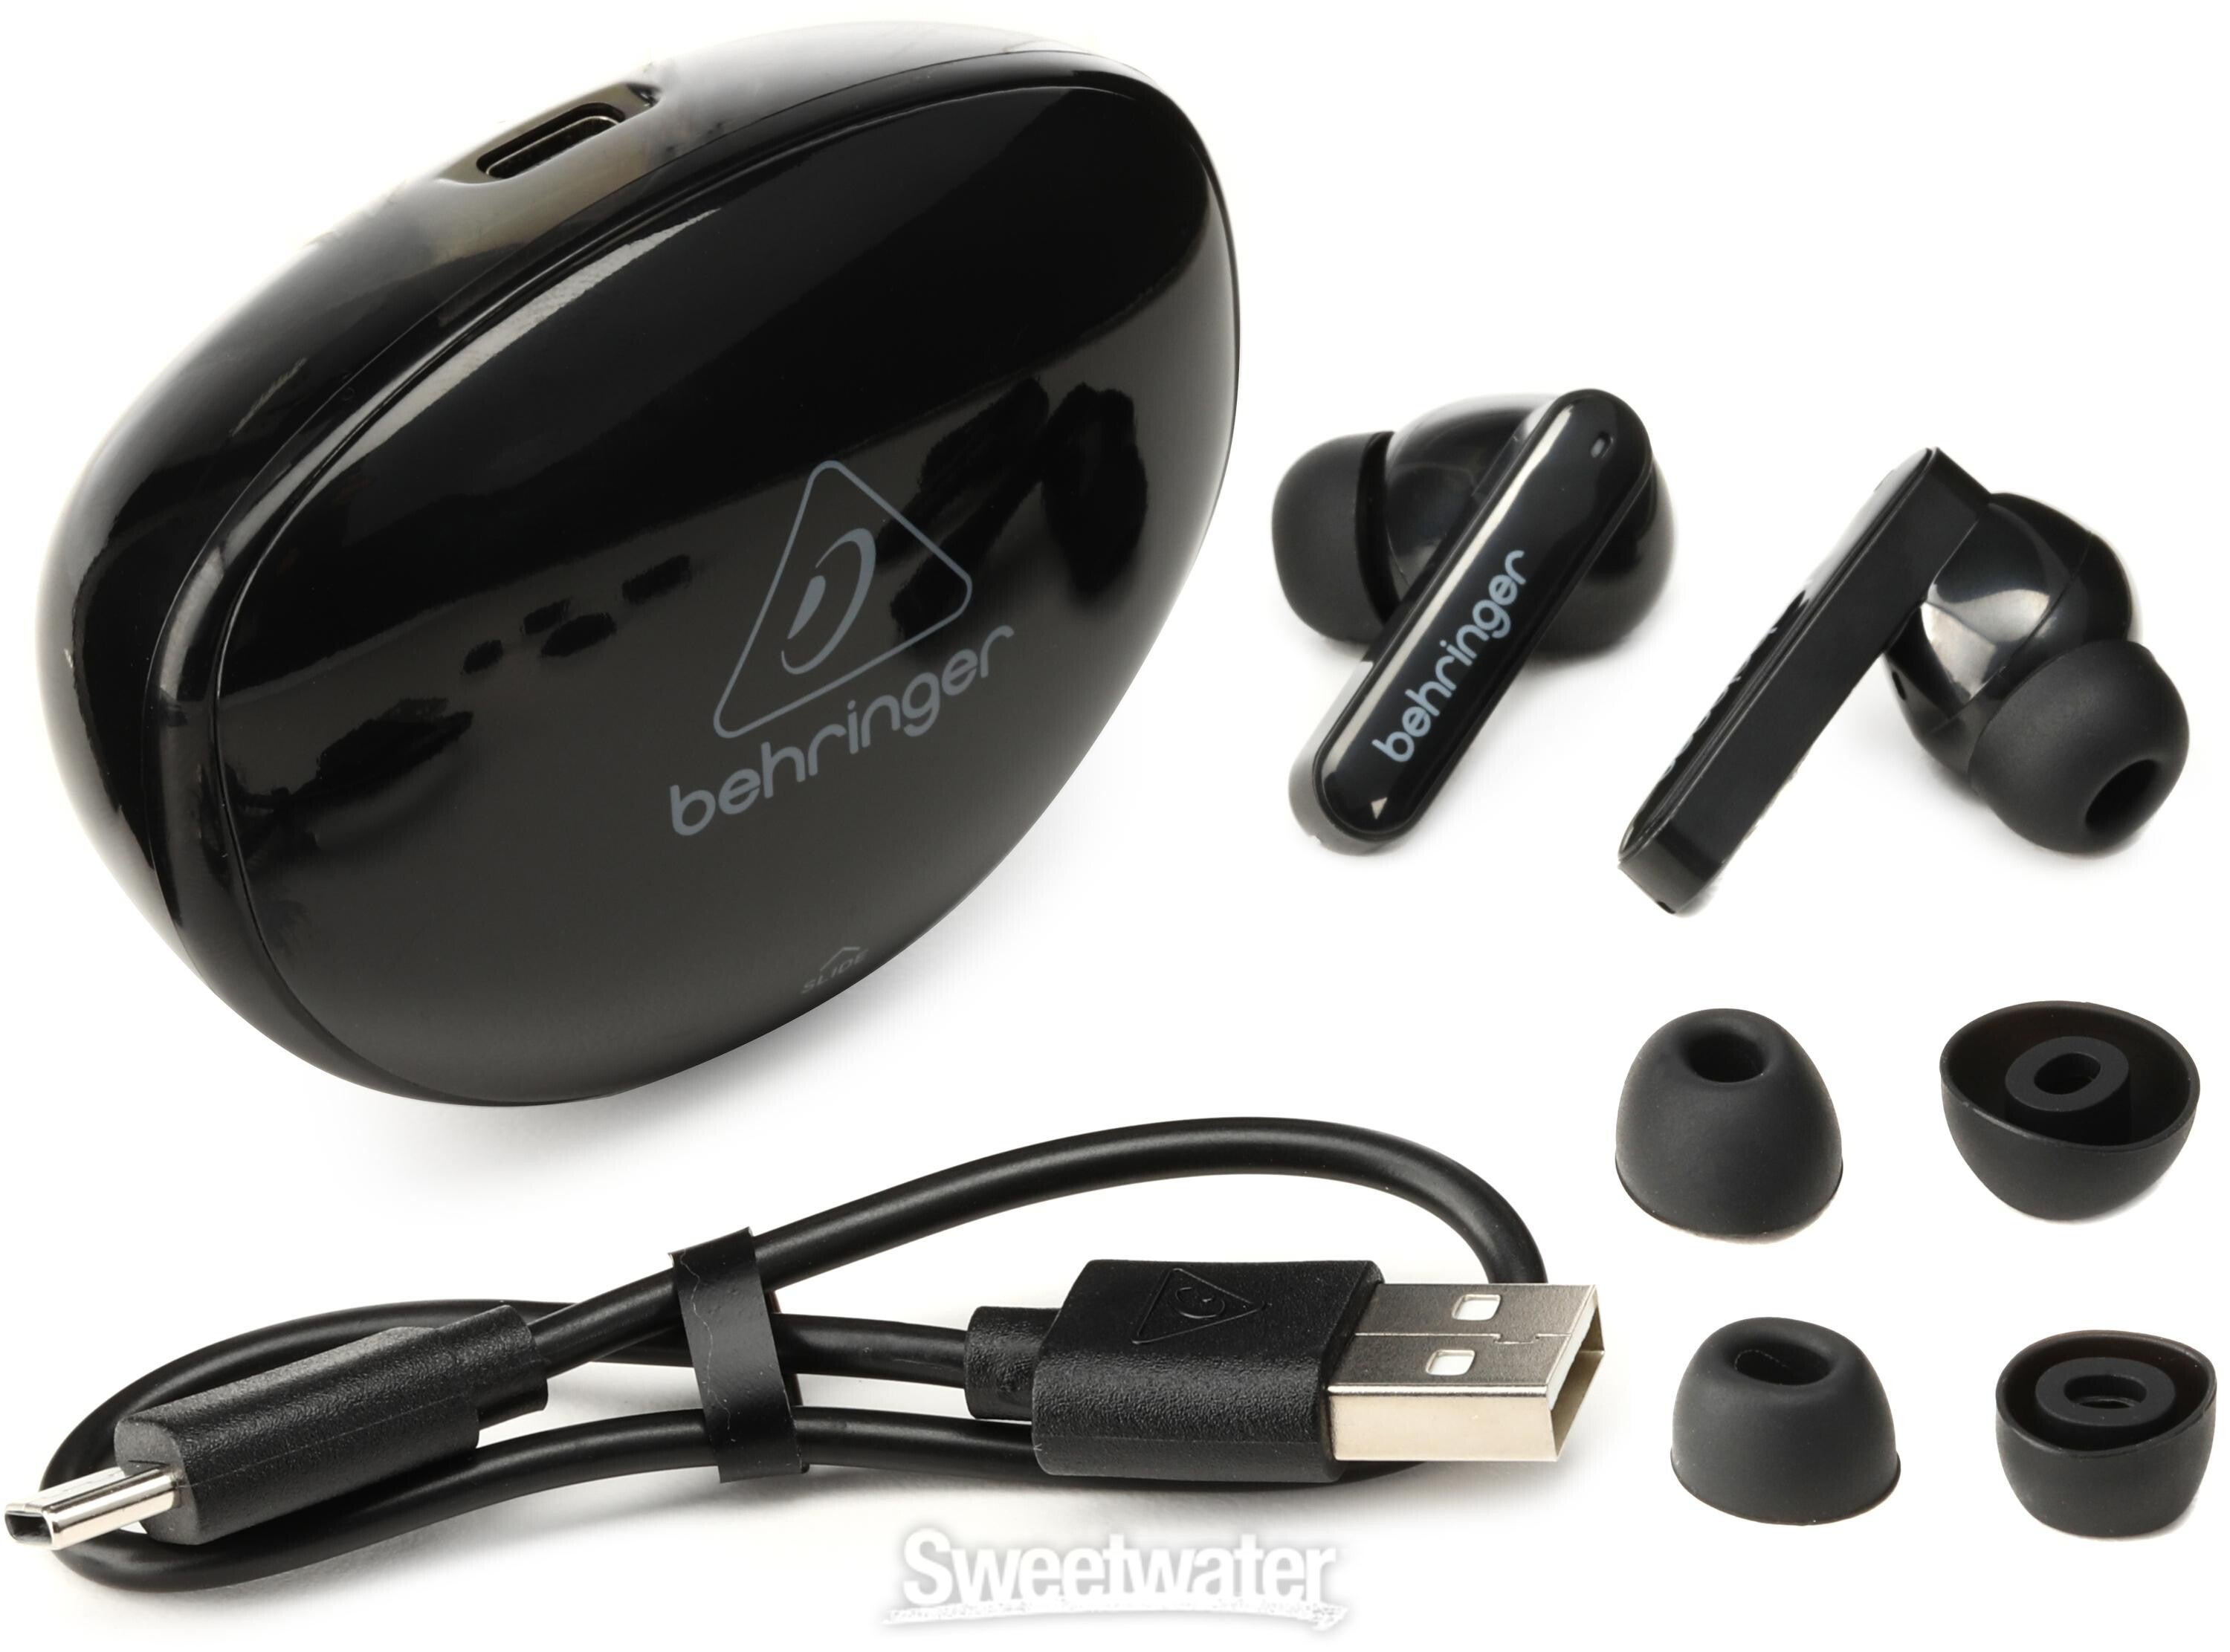 Behringer T-Buds Wireless Bluetooth Earphones Reviews | Sweetwater